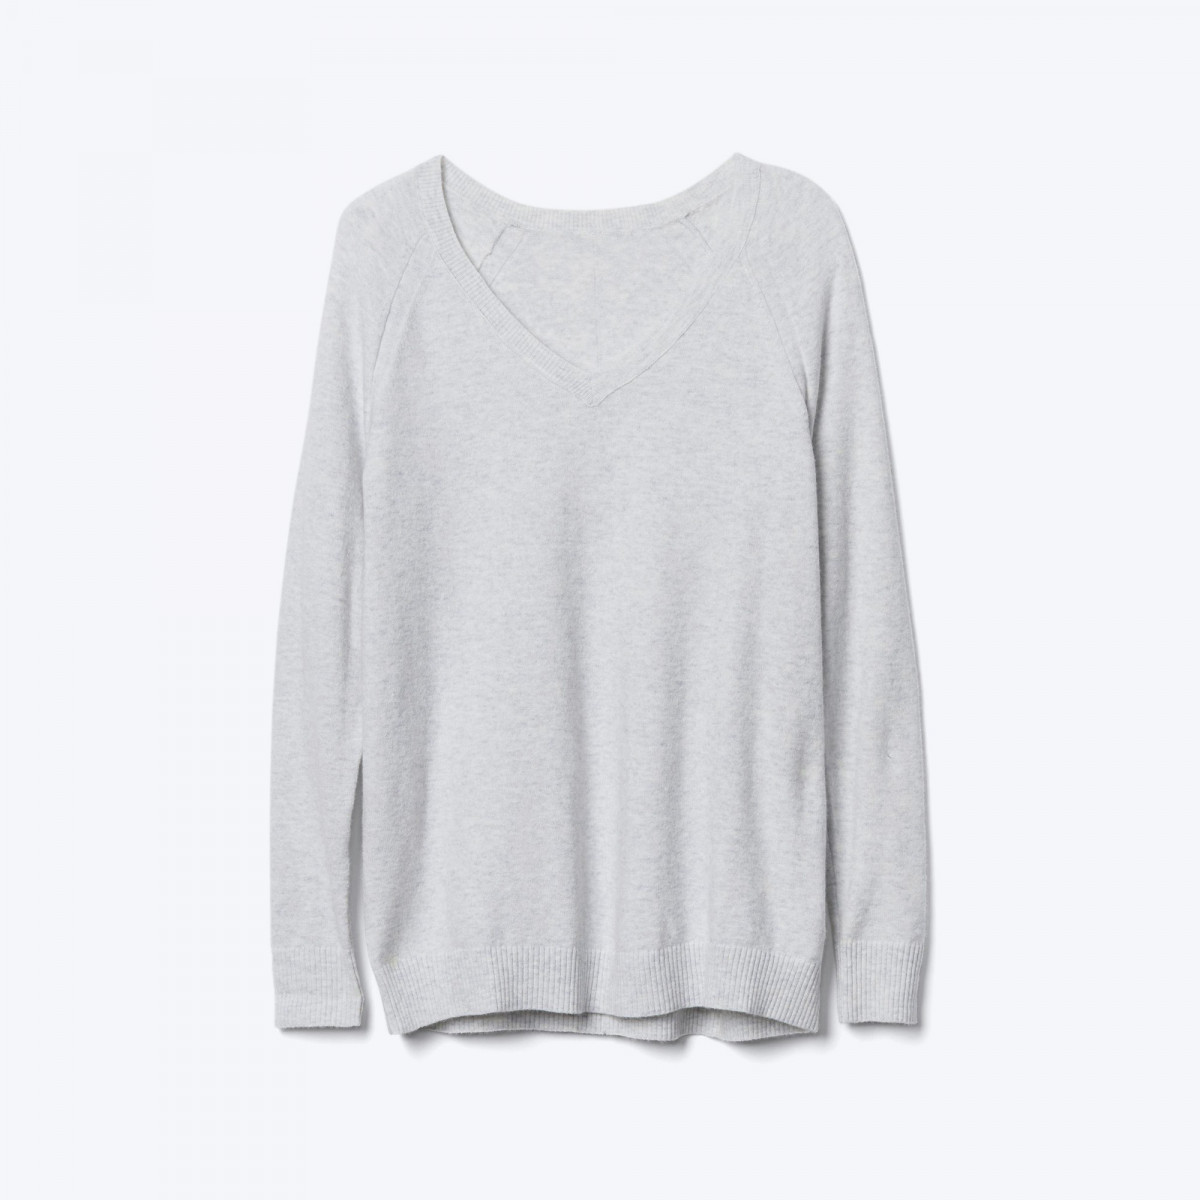 Soft open V-neck sweater